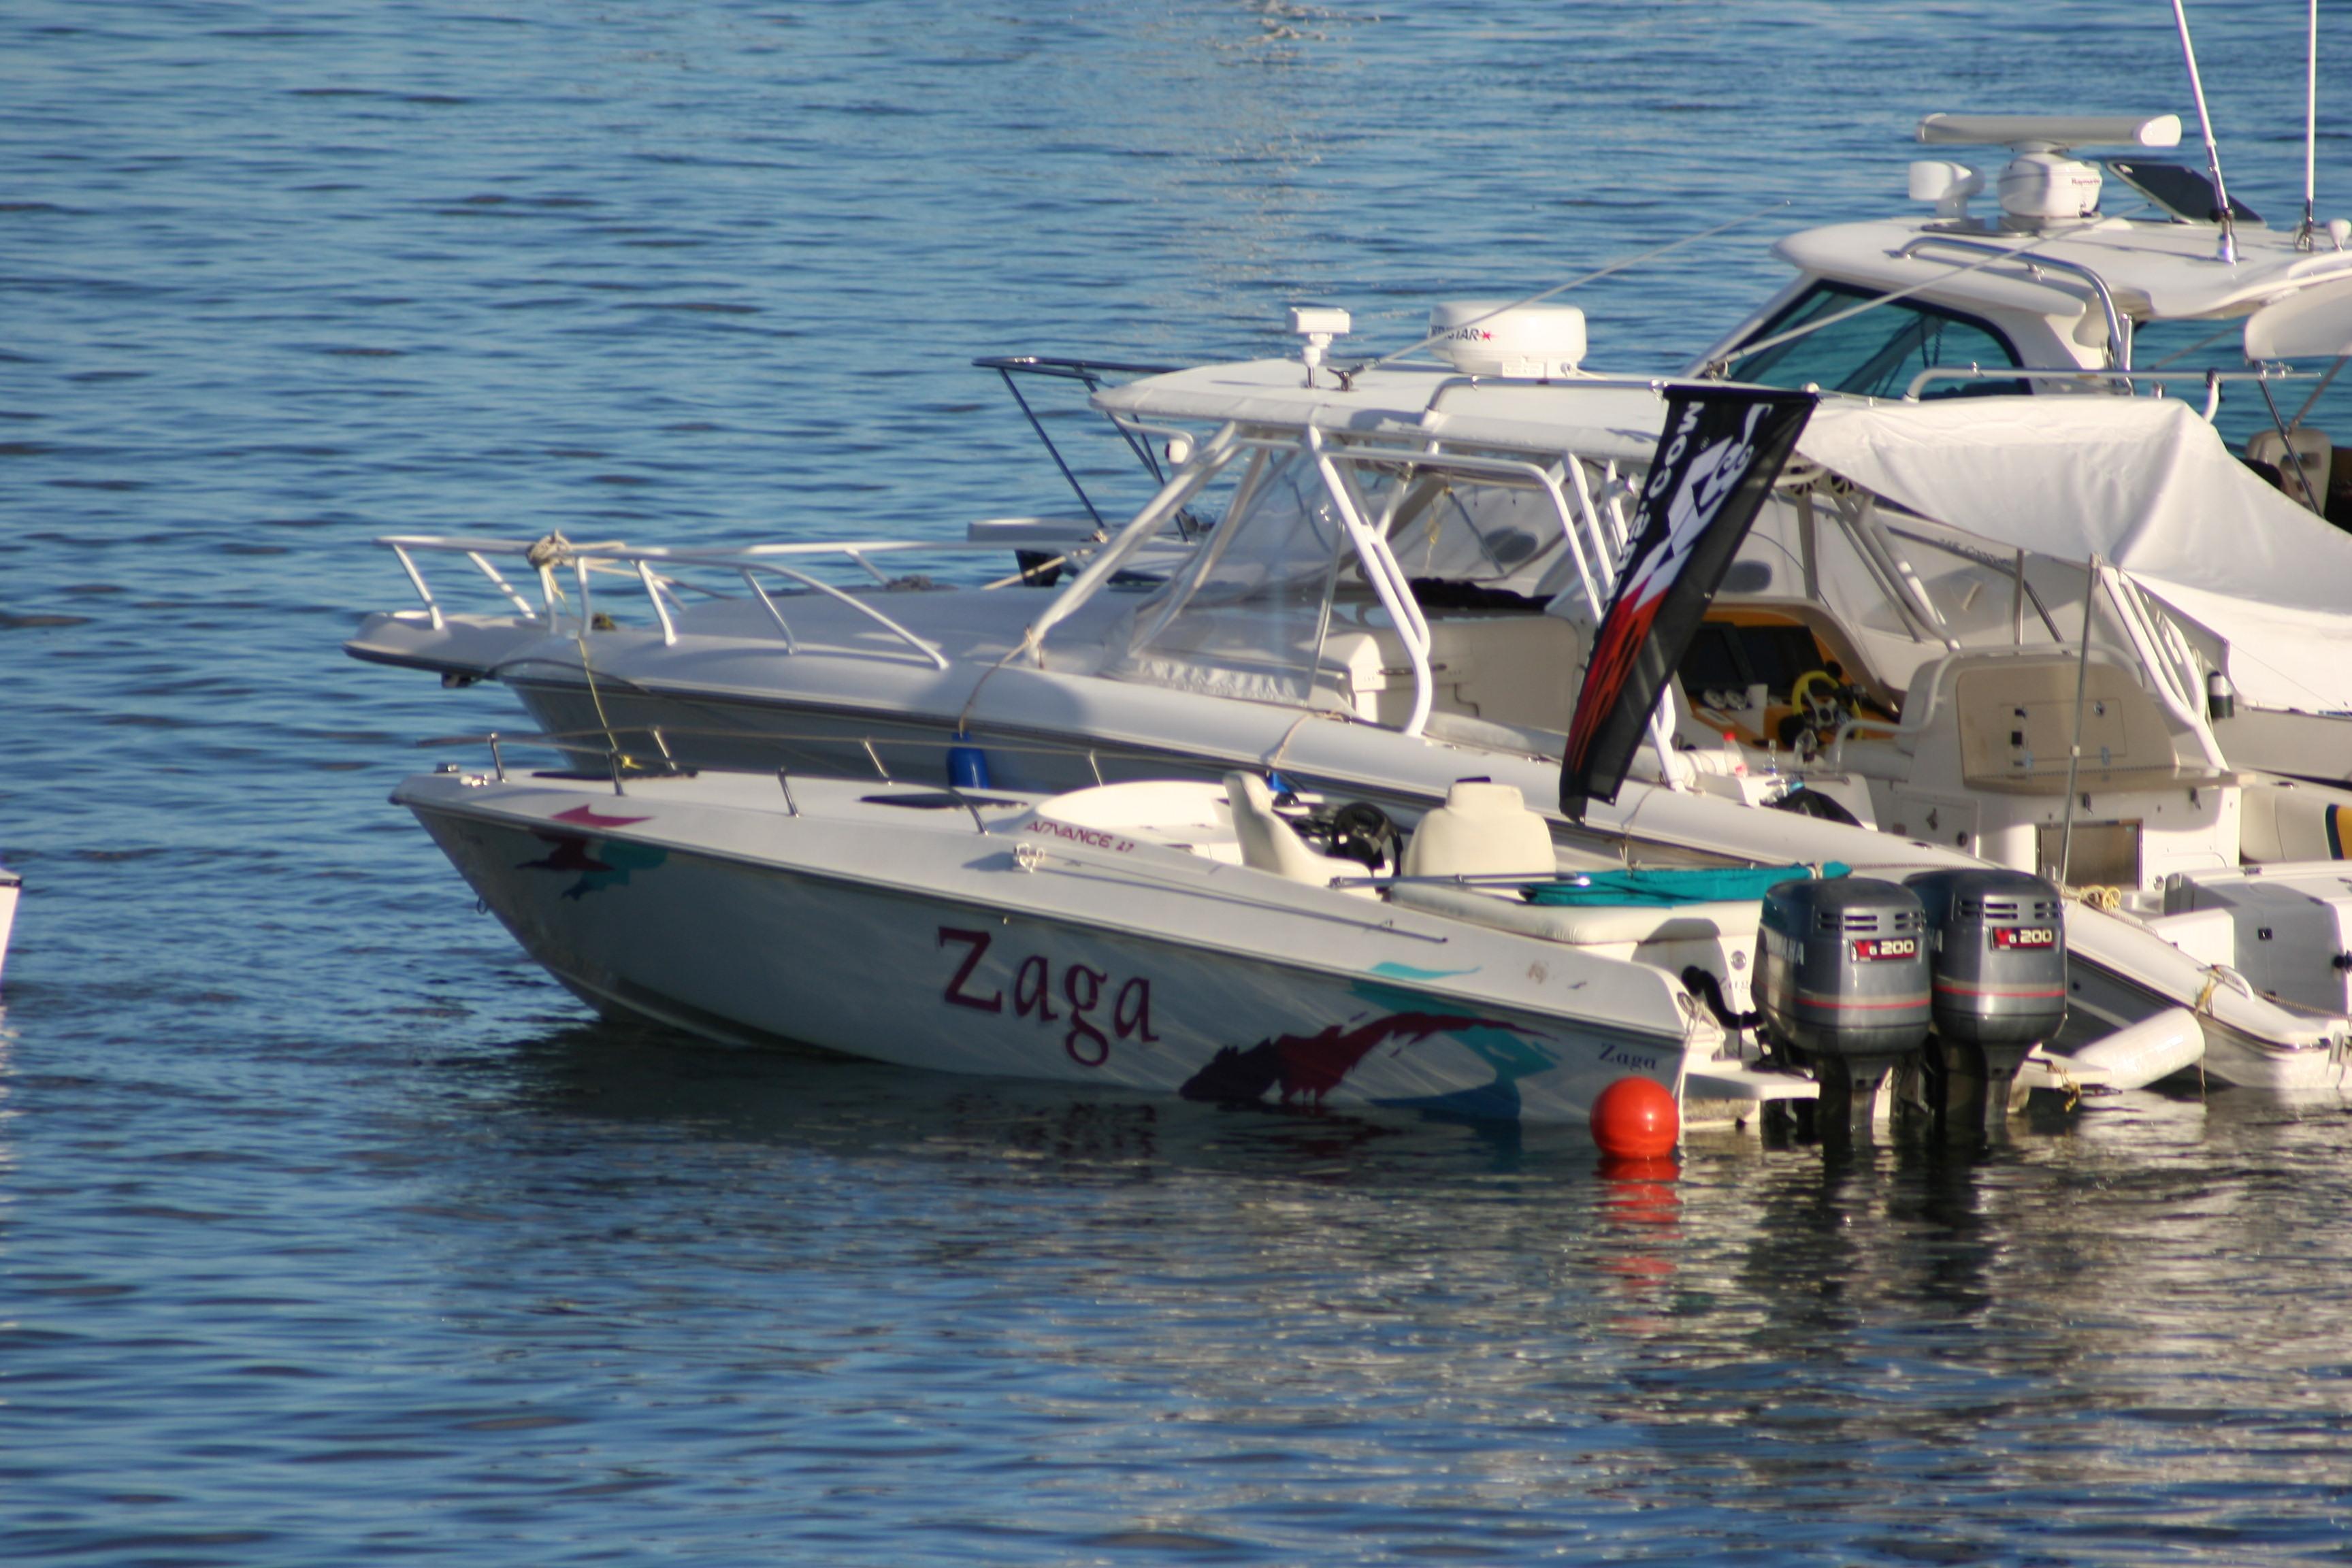 Zaga - our Trini speedboat